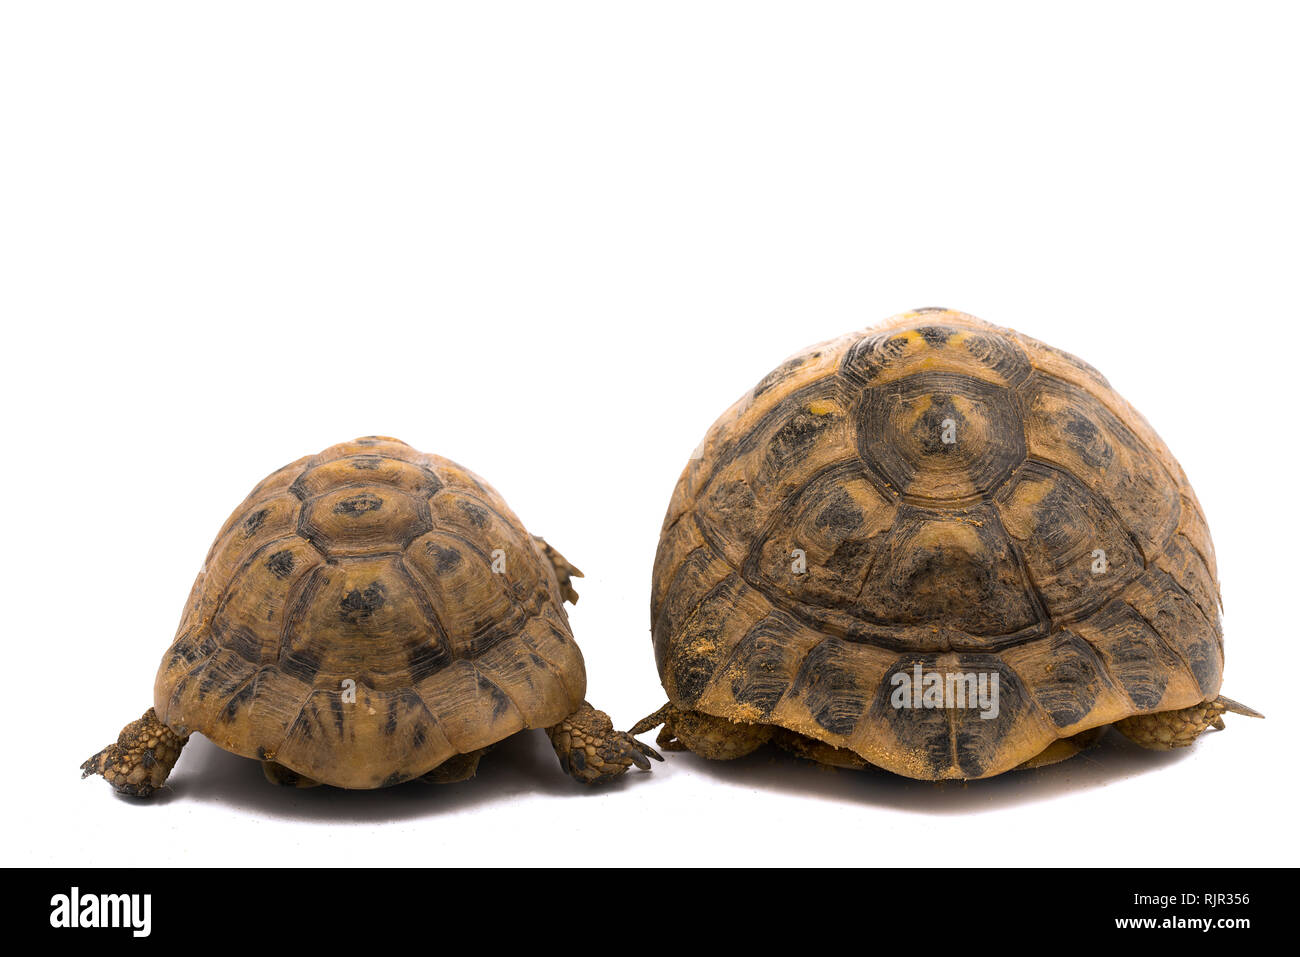 Sperone thighed tartaruga (Testudo graeca) e Hermann's tartaruga (Testudo hermanni) schiena a schiena con sfondo bianco Foto Stock